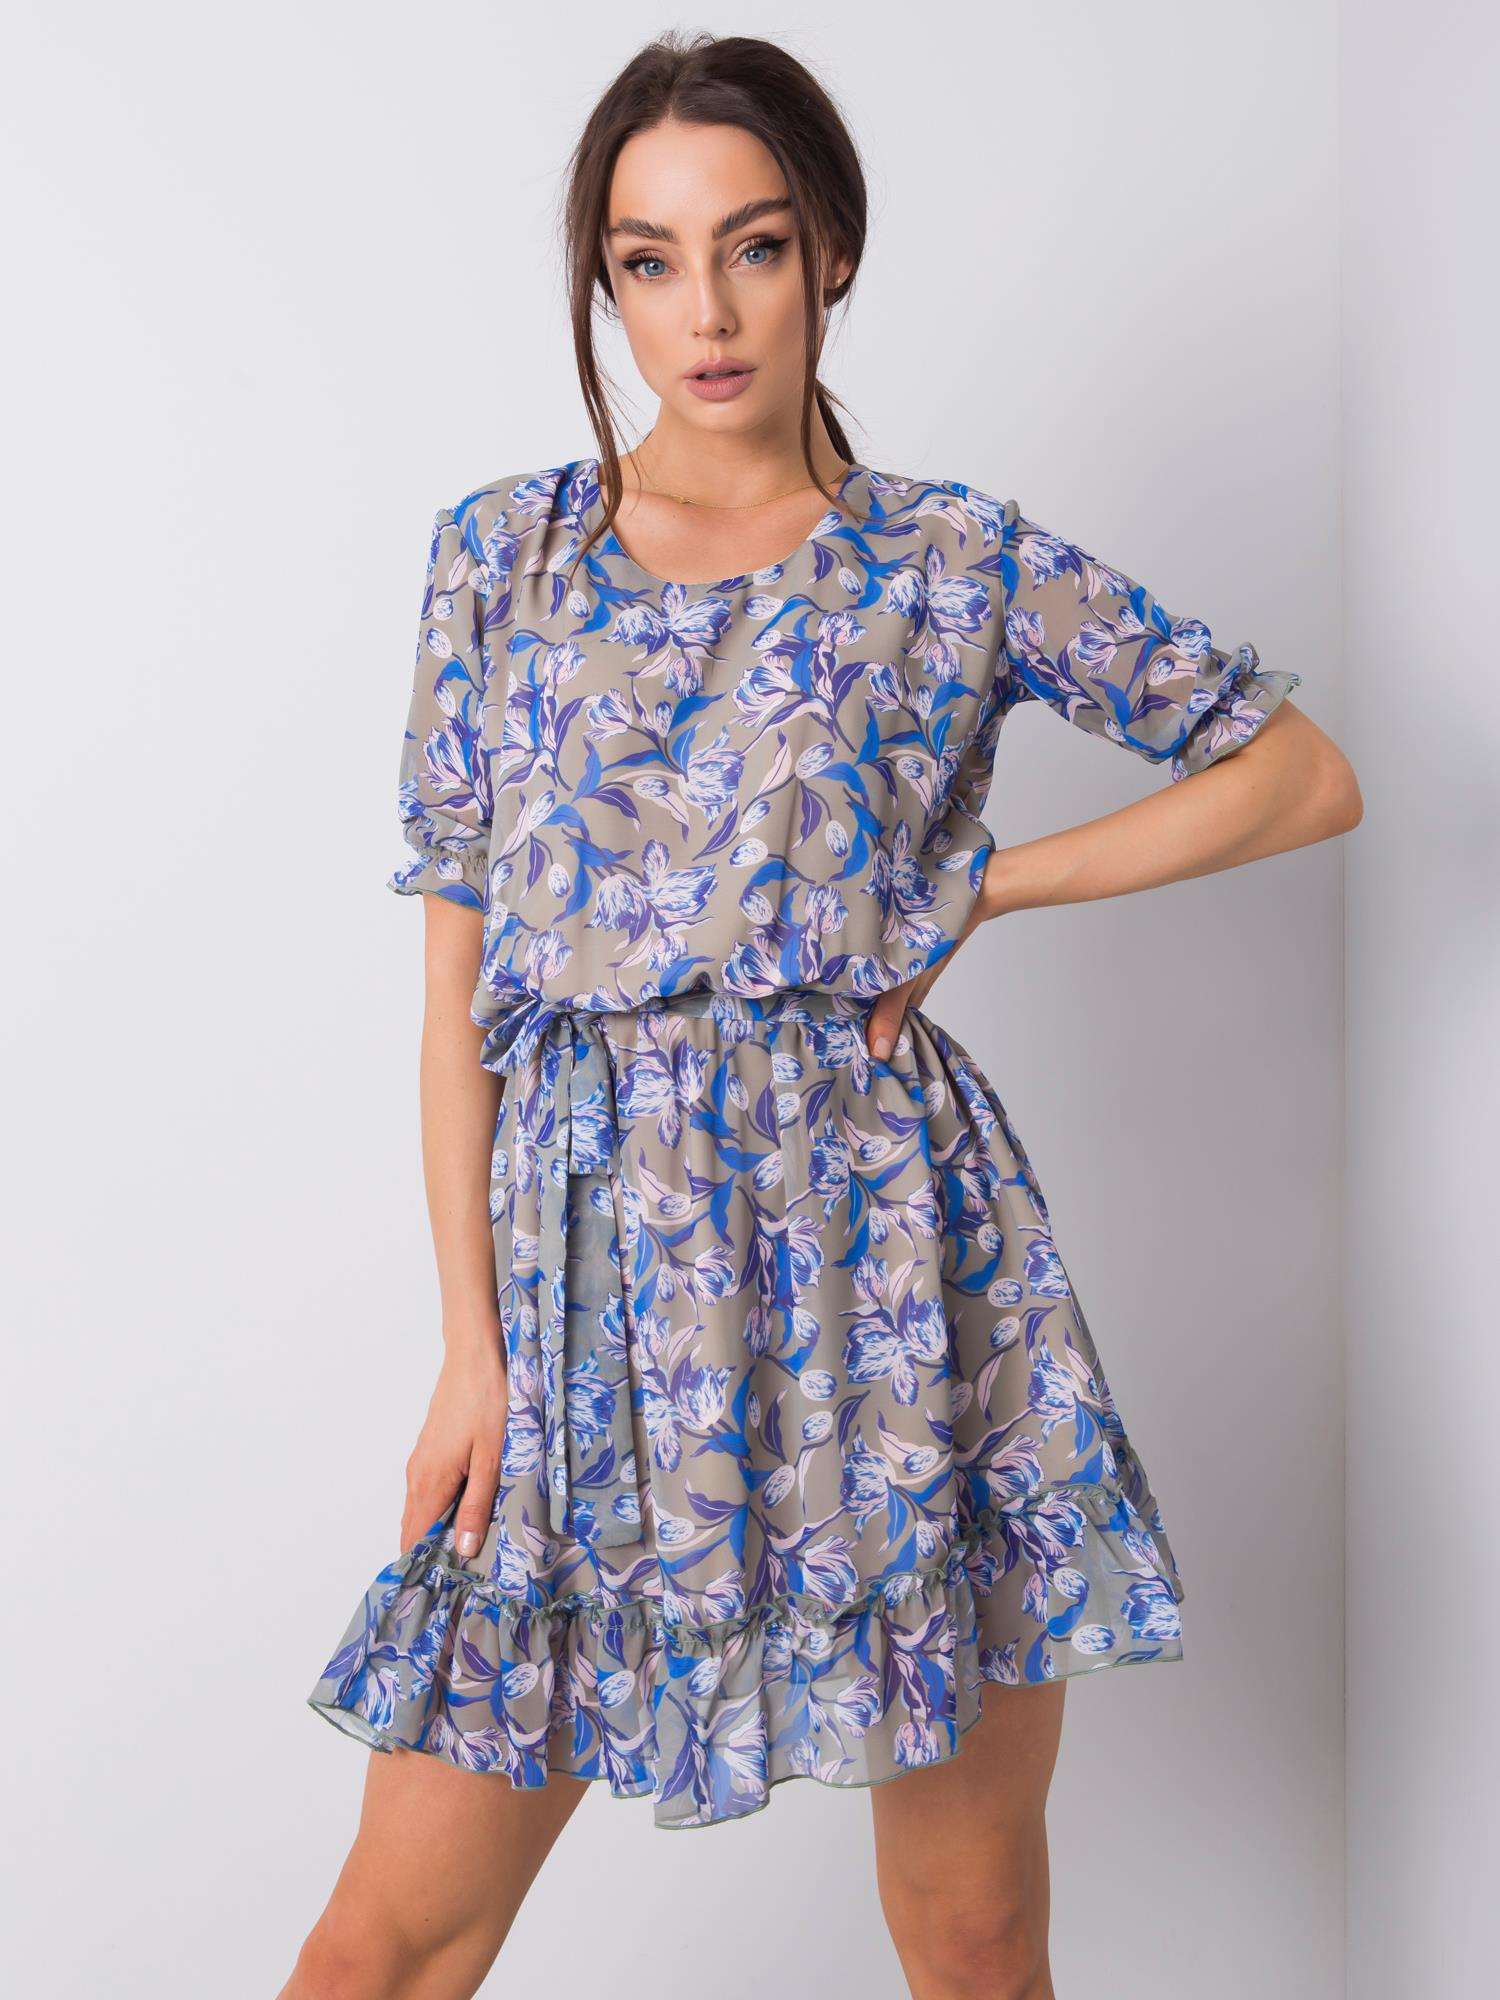 Khaki dress with floral print